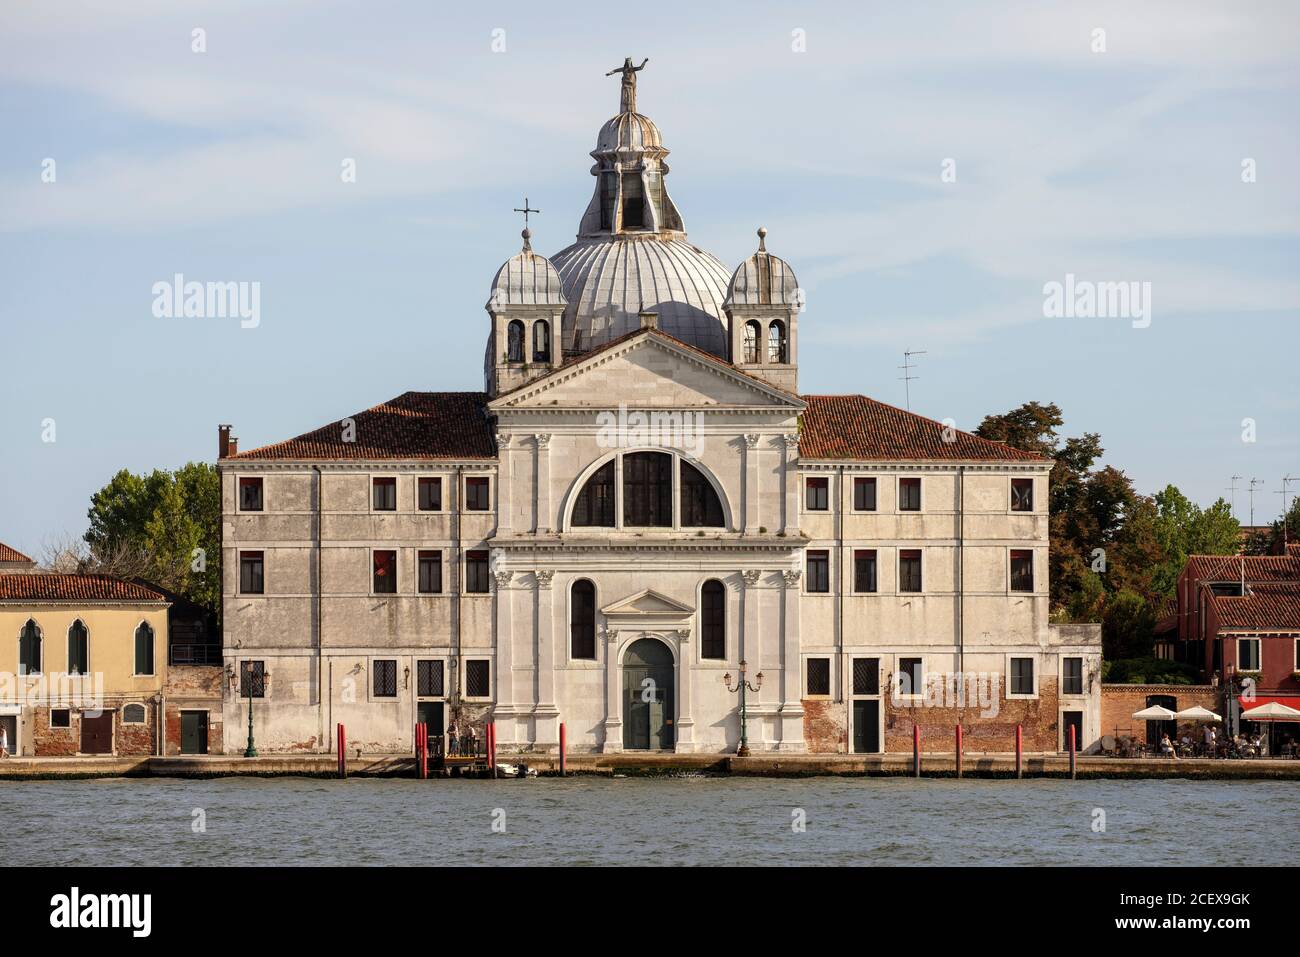 Venedig, Insel Giudecca. Kirchele Zitelle, 1582-1586 nach Plänen von Andrea Palladio erbaut, Nordfassade, Blick über den Canale della Giudecca Banque D'Images